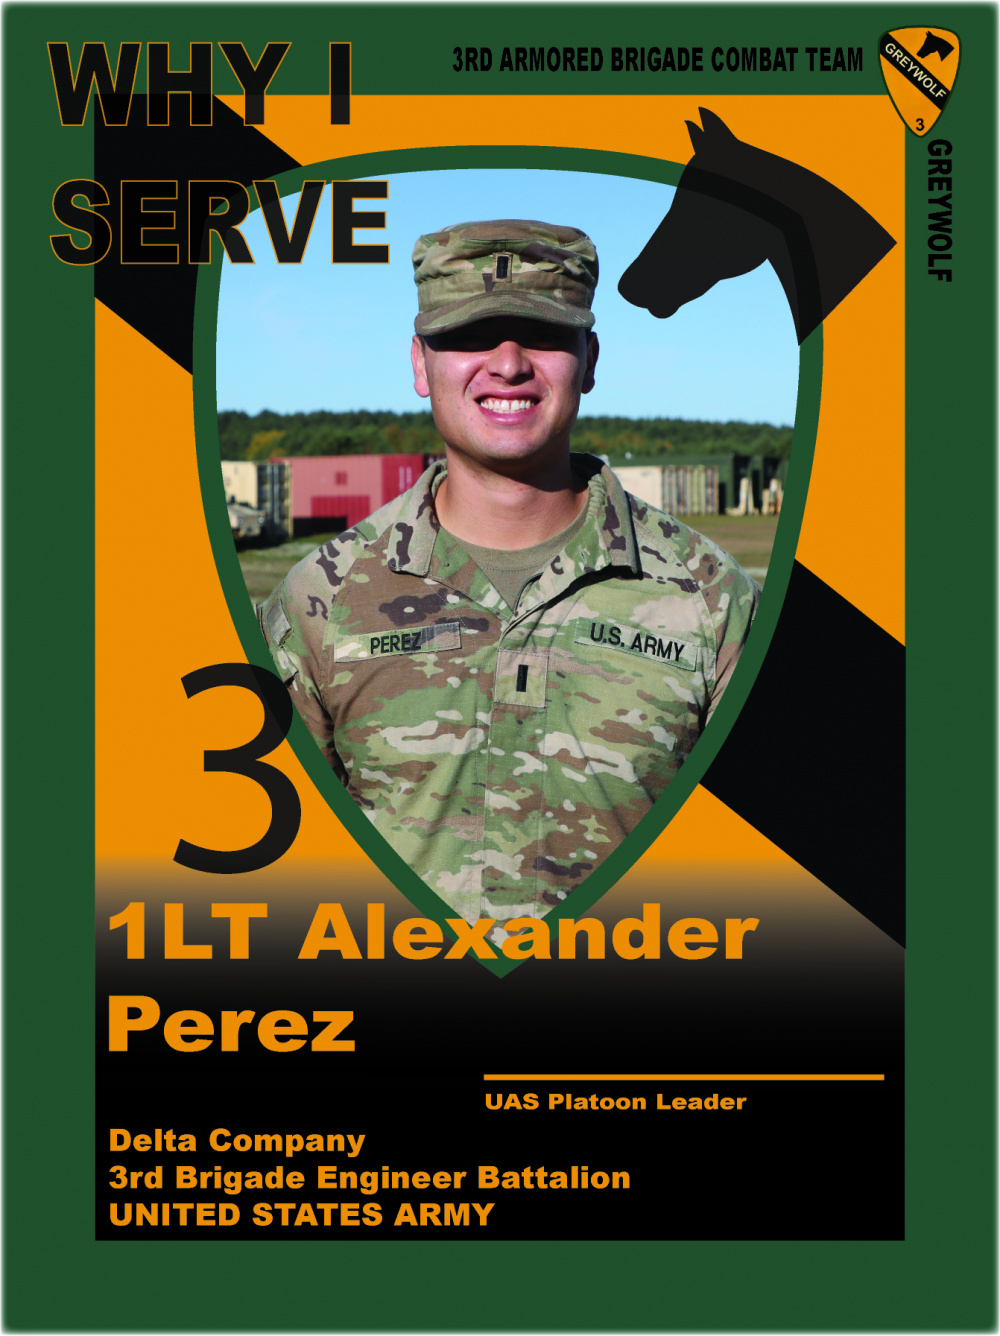 Why I Serve - Lt. Perez